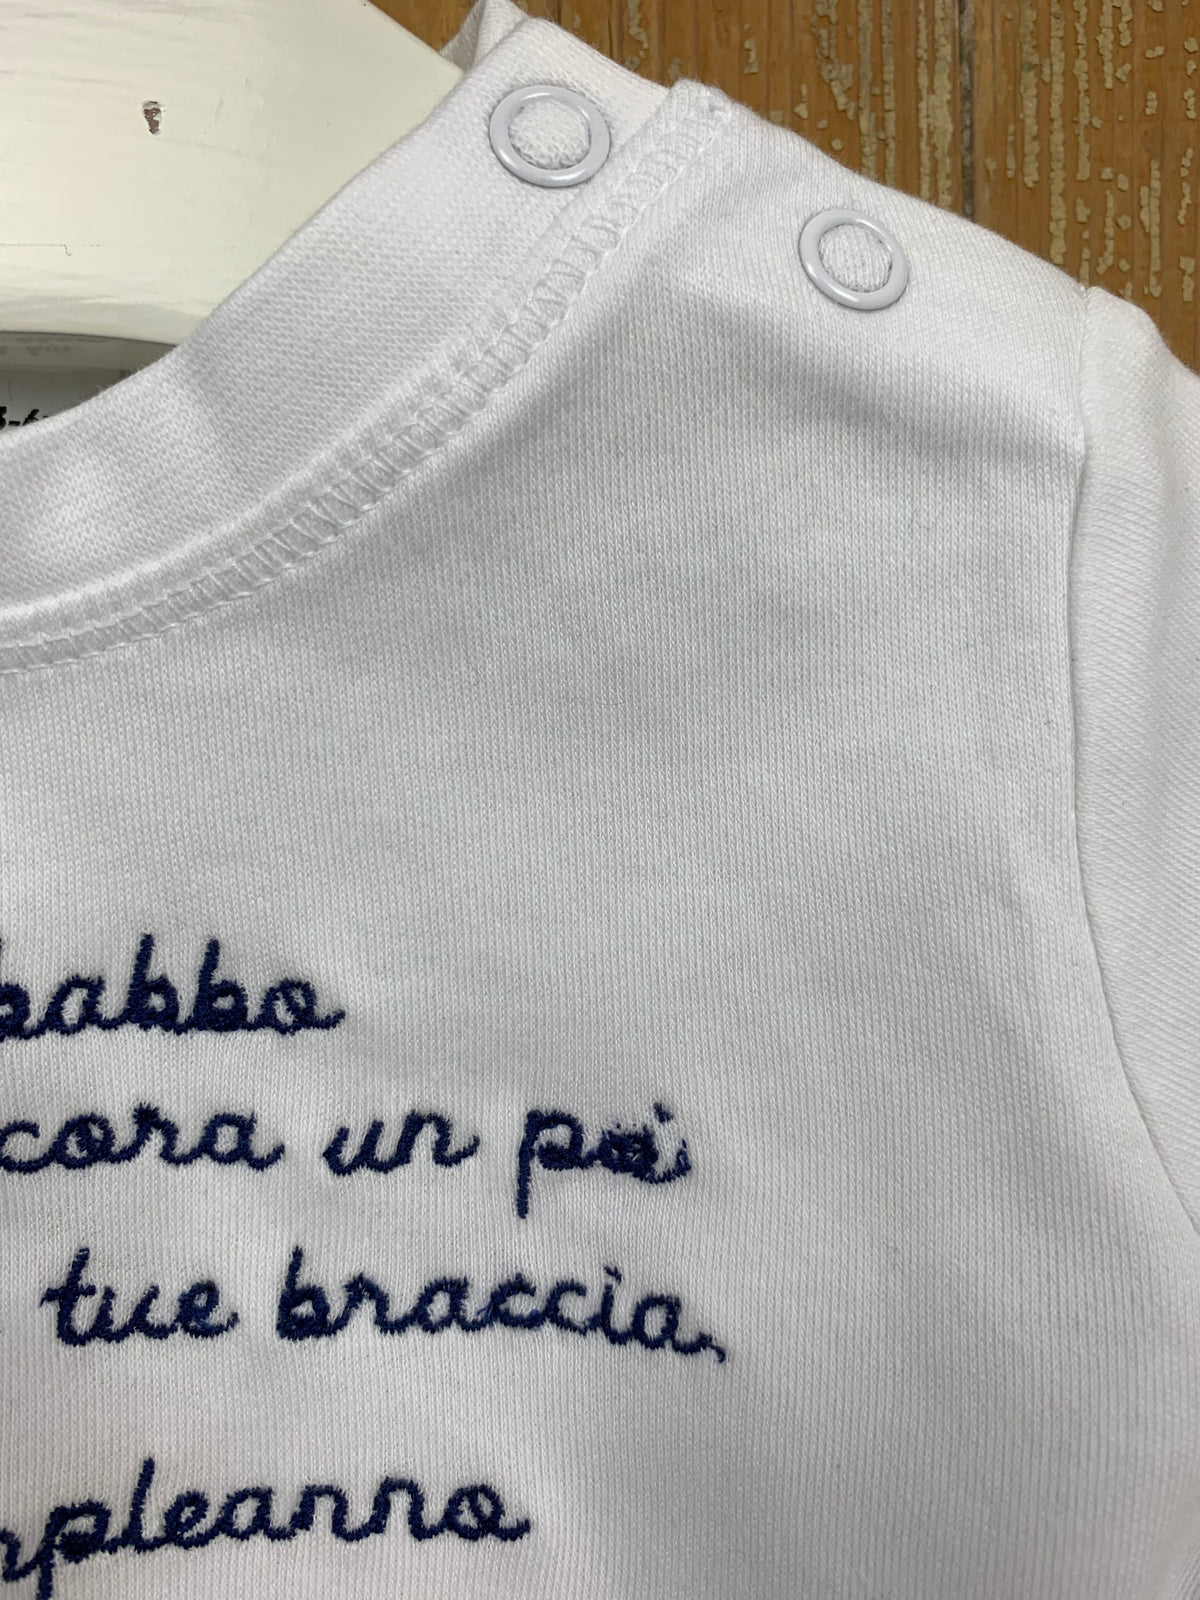 T-shirt Neonato 3-6 mesi - Caro Babbo!+ 40 Blu e azzurro